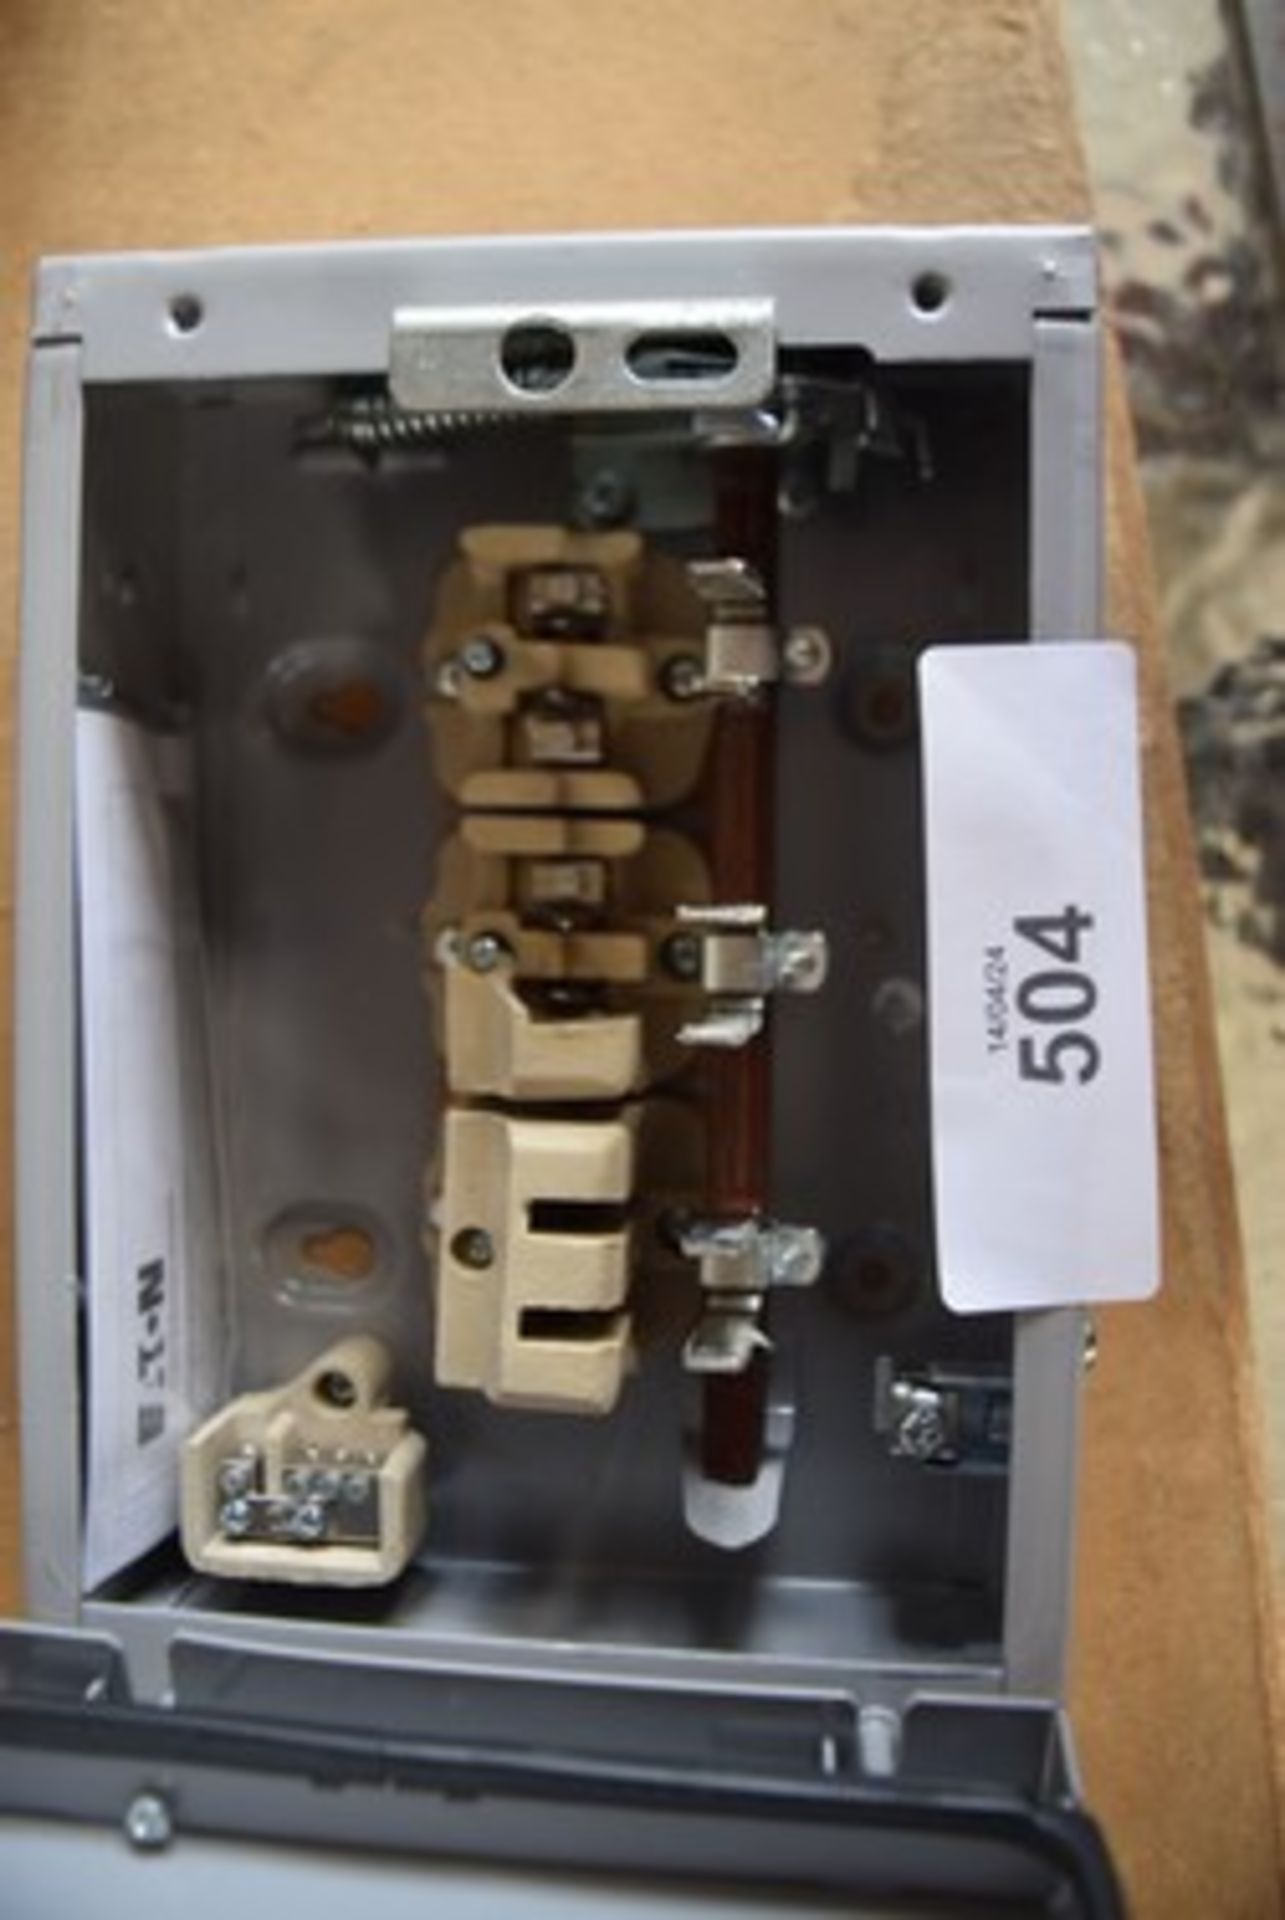 2 x Eaton Exel switch disconnectors, item no: 30AXTN2, Note: some ceramic insulators are broken - - Image 5 of 12